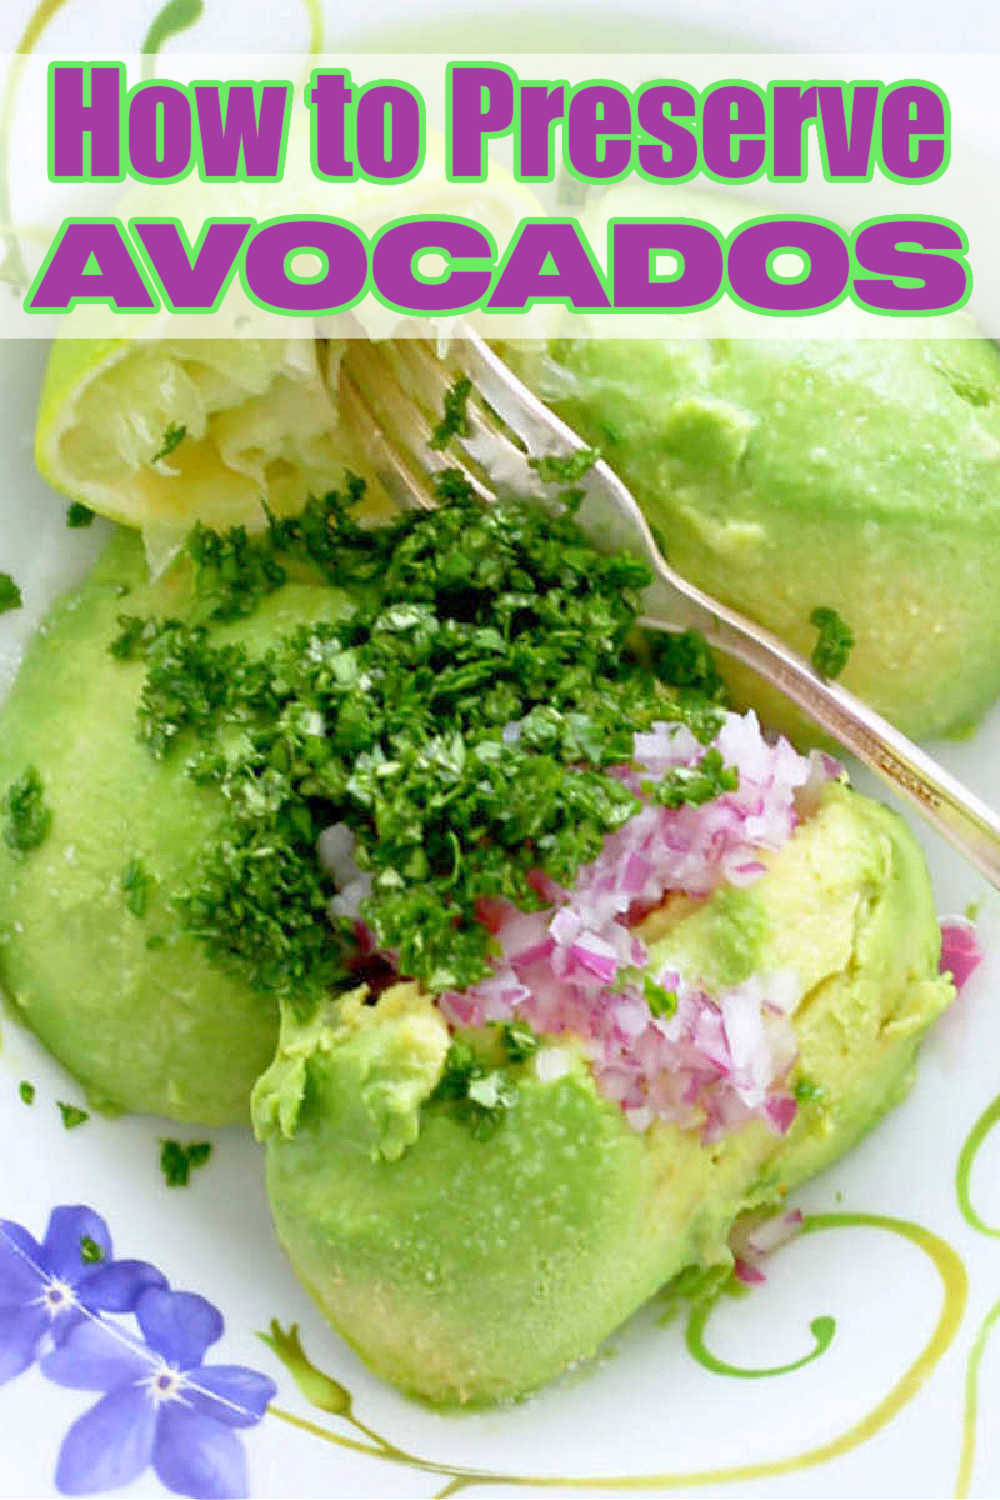 How to Preserve Avocados | Foodtastic Mom #freezingavocados #avocadorecipes #howtopreserveavocados via @foodtasticmom